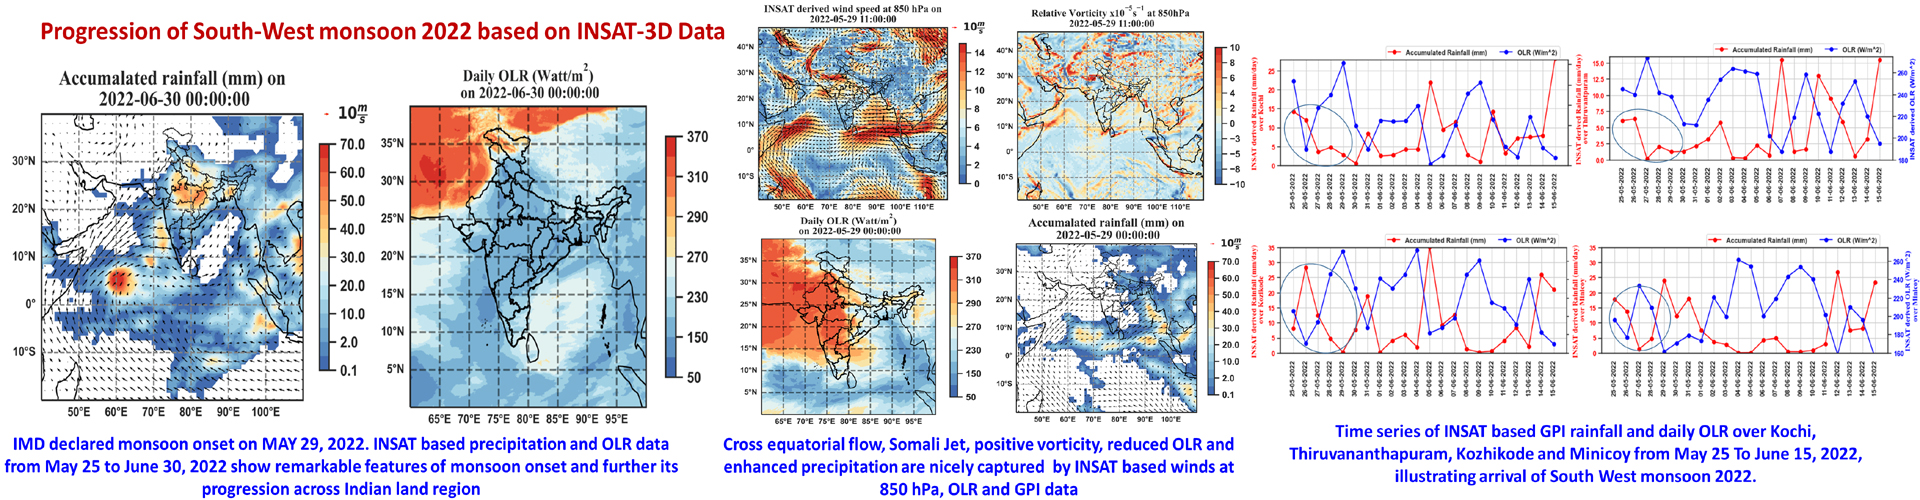 Image of Monitoring progression of South-West monsoon 2022 based on INSAT data